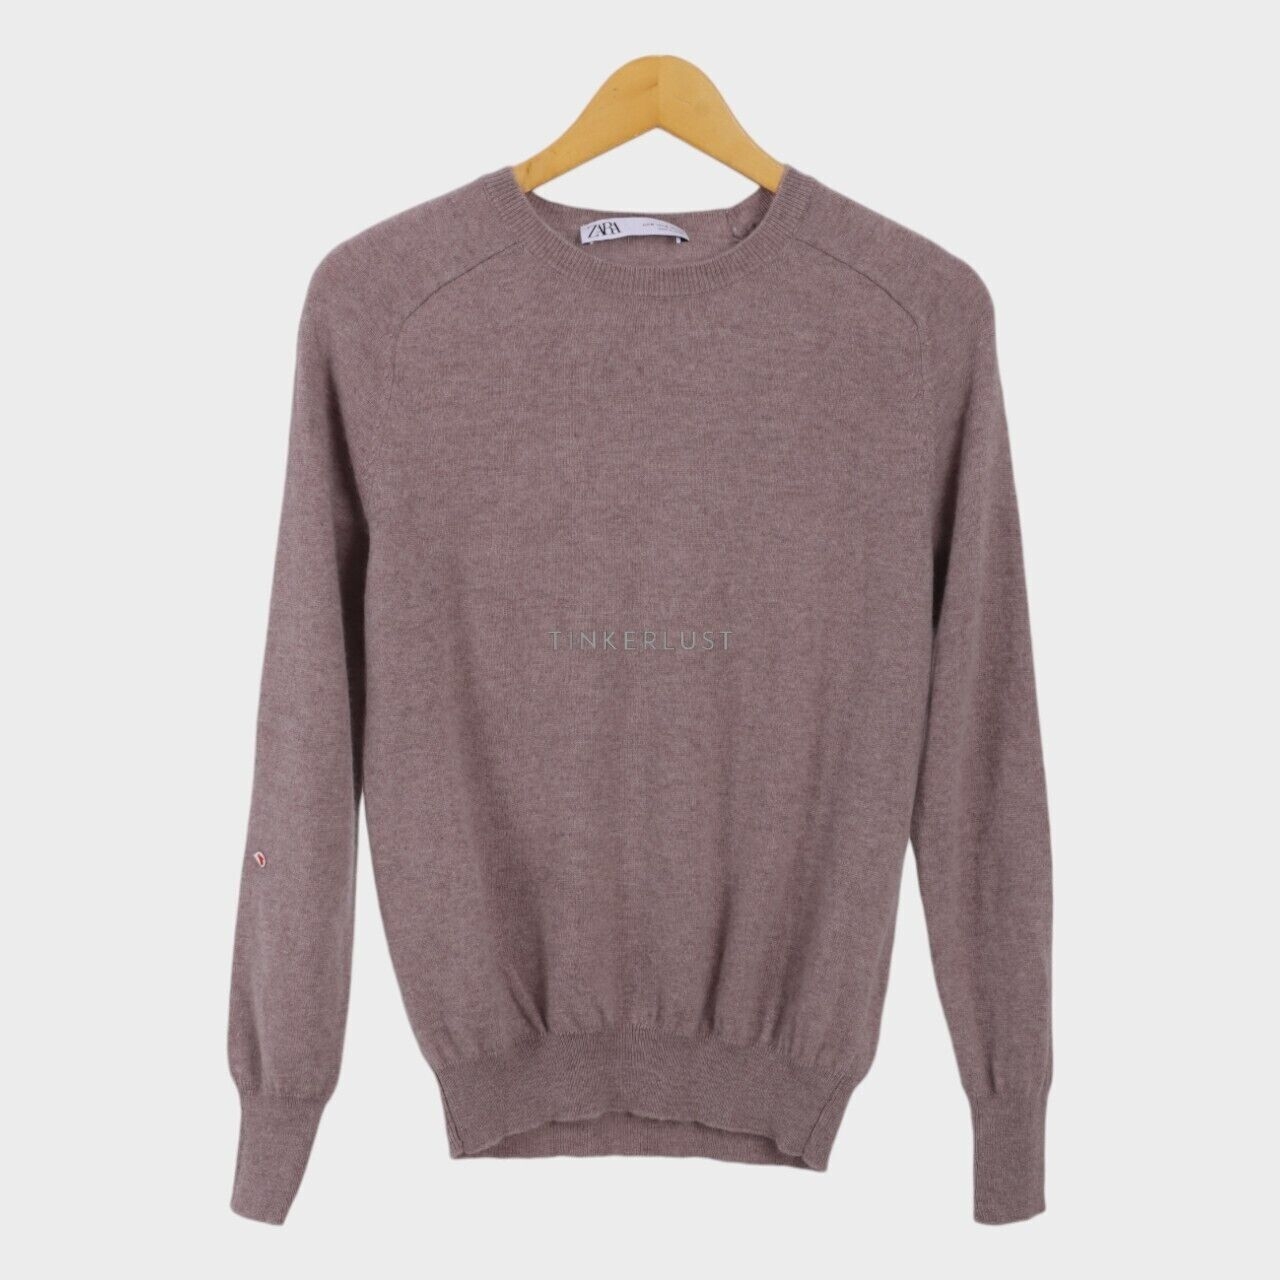 Zara Taupe Sweater